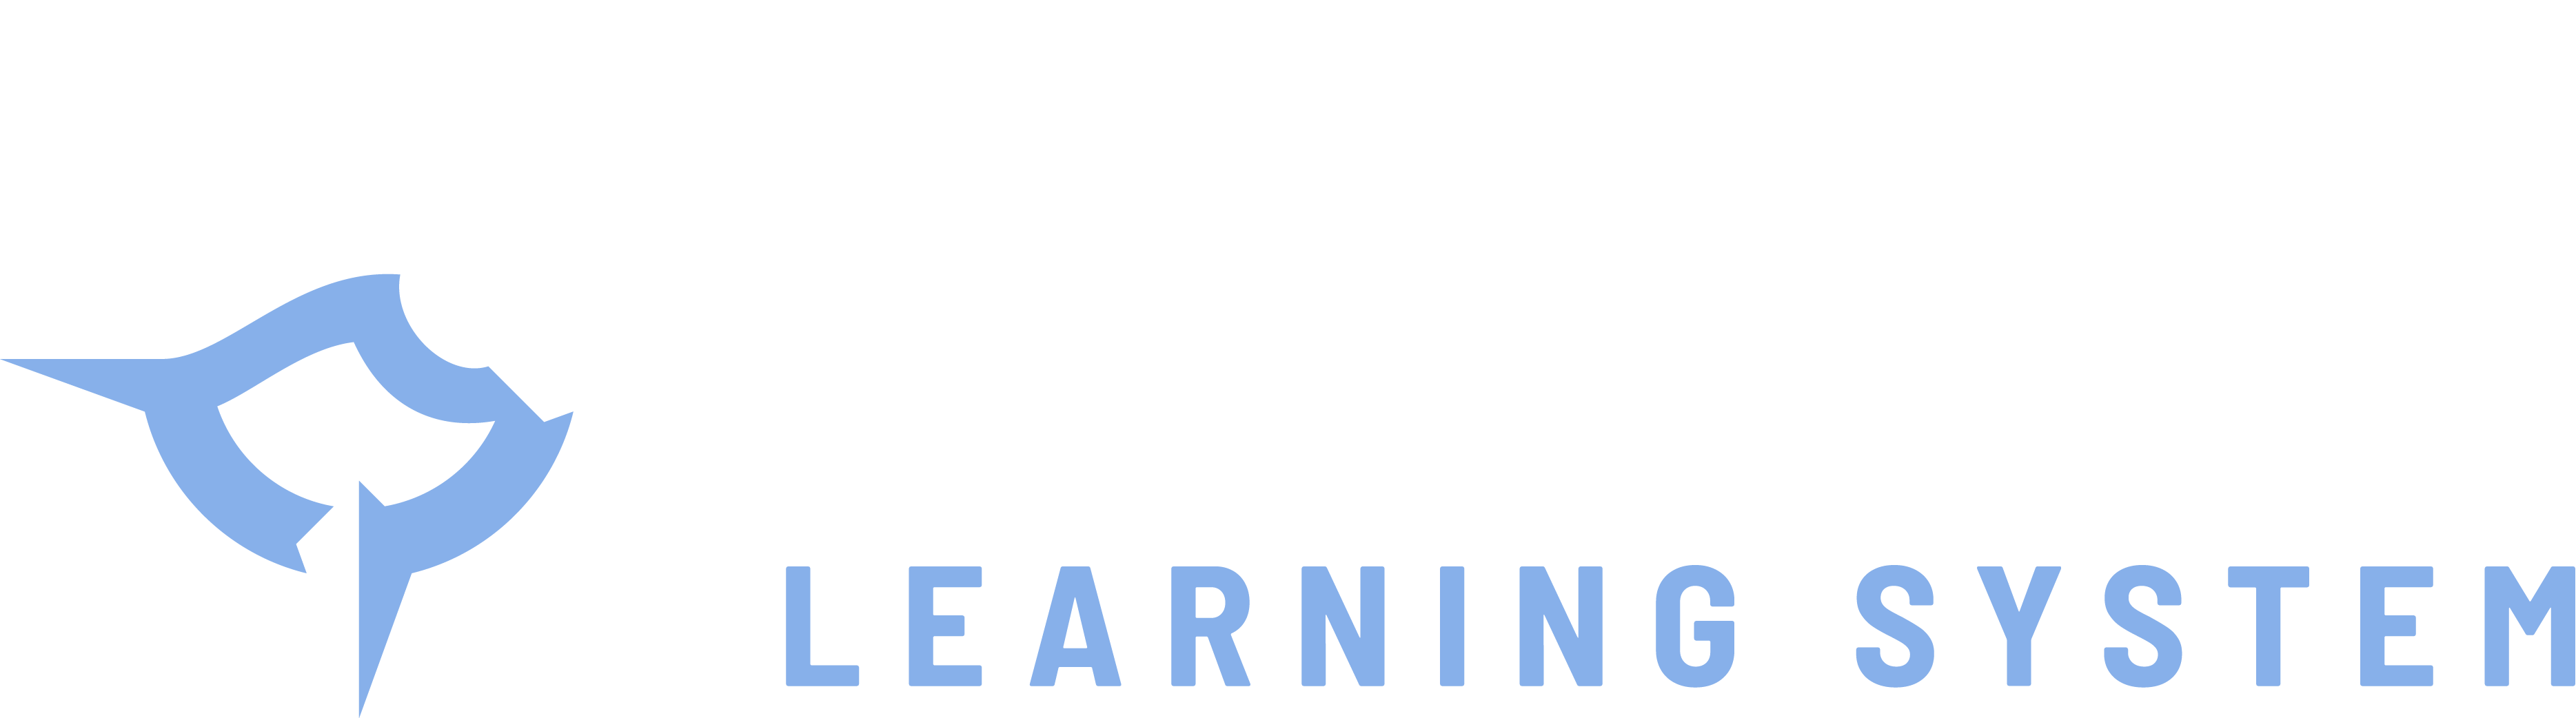 Mariners Learning System Horizontal Logo - Light